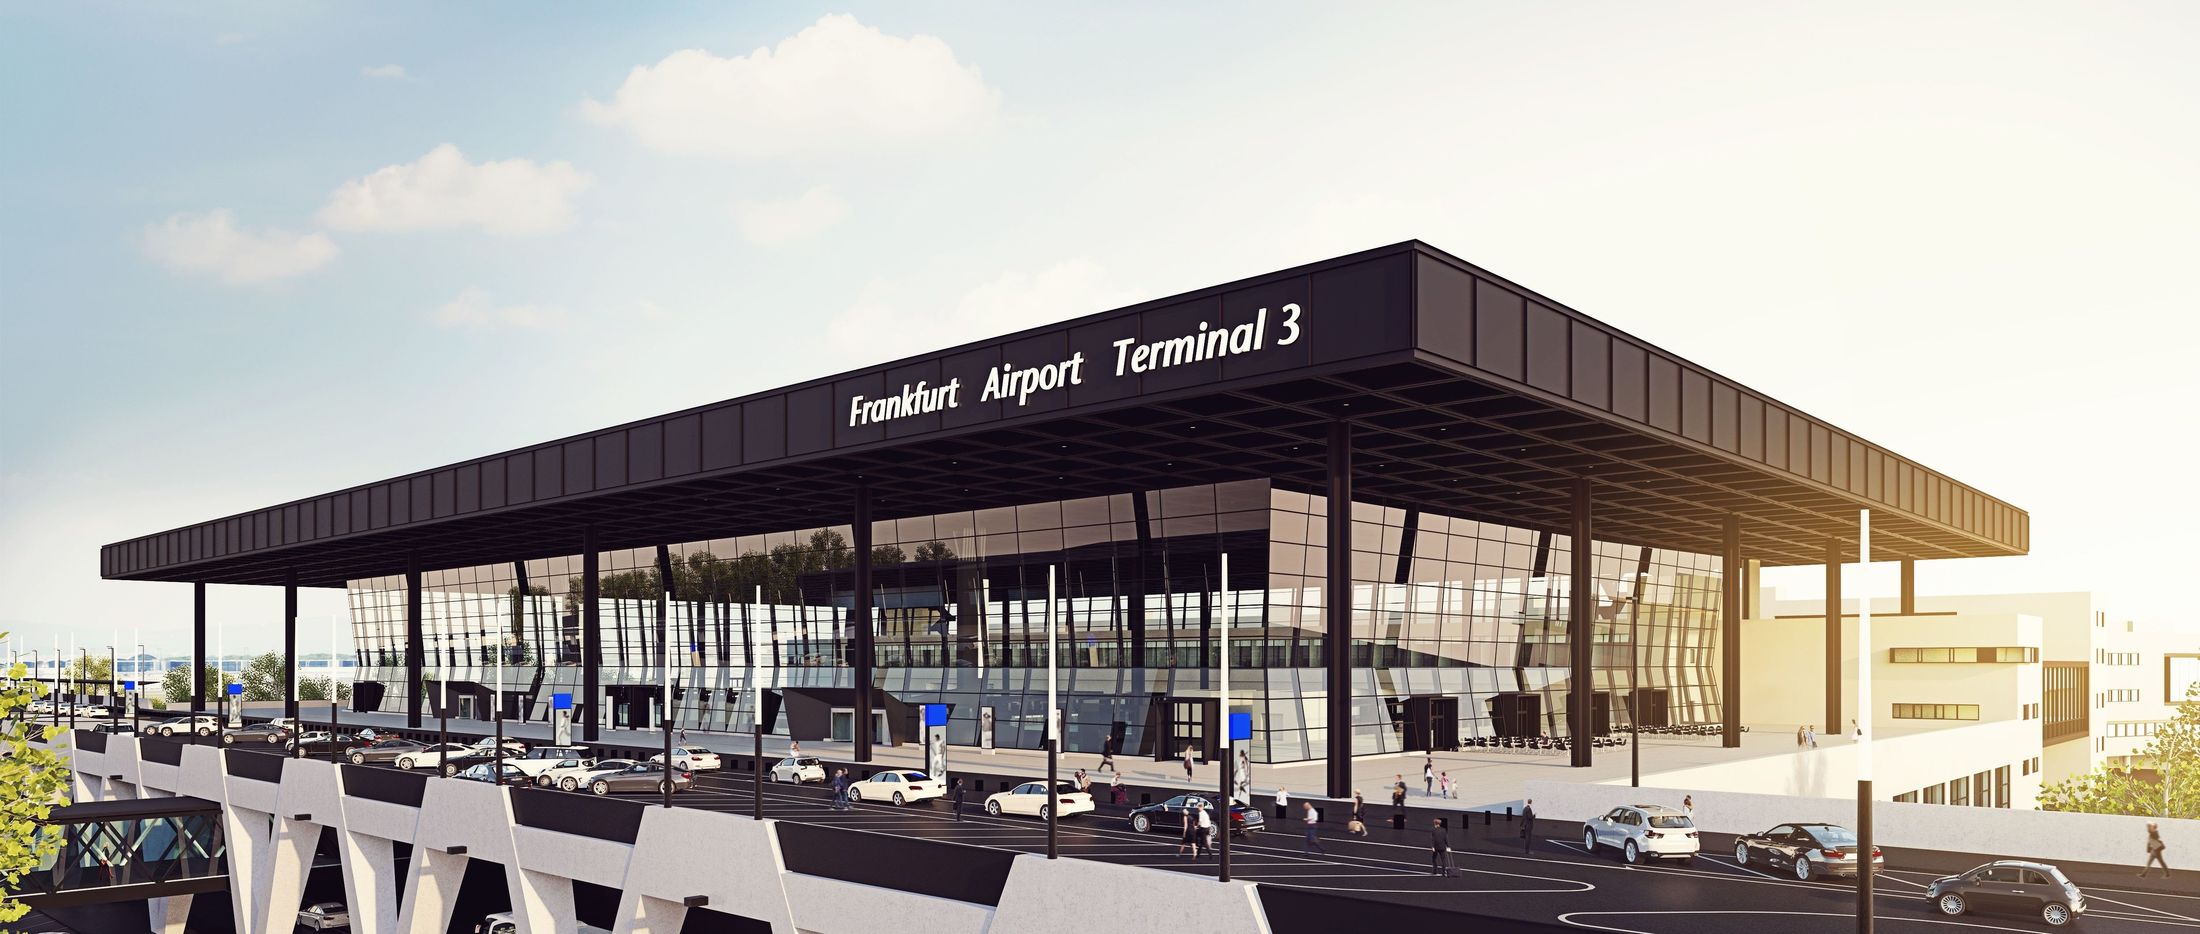 Flughafen Frankfurt Terminal 3 